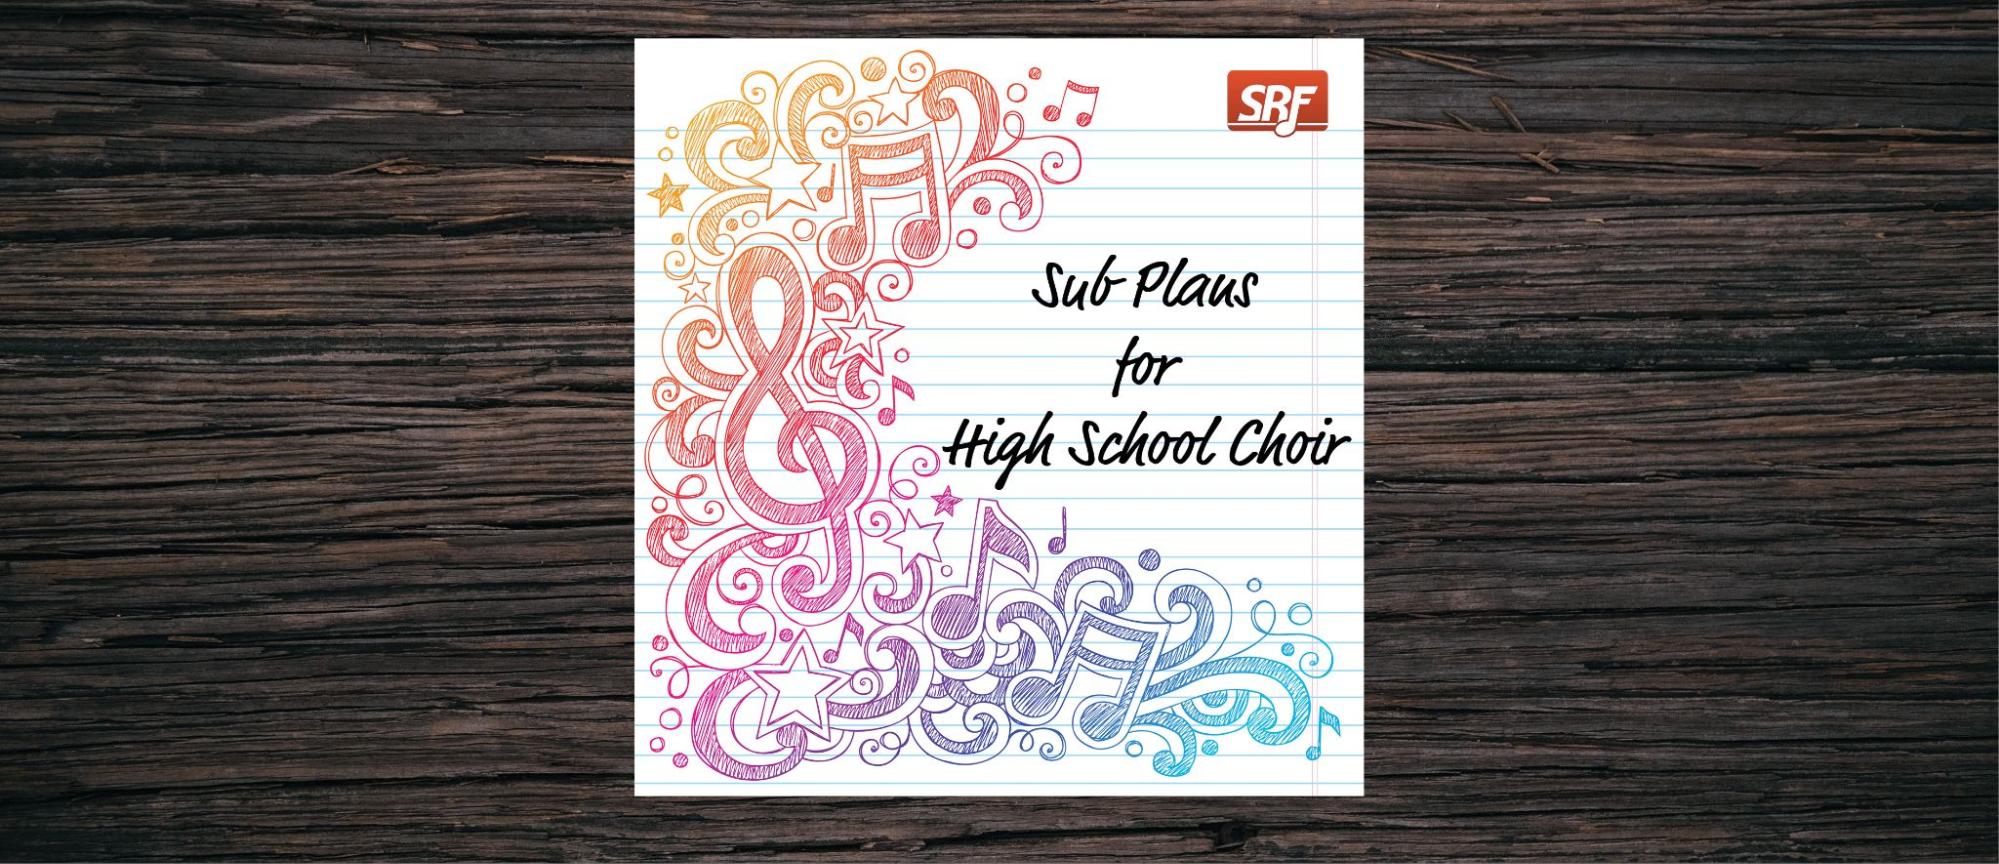 Substitute Plans for High School Choir